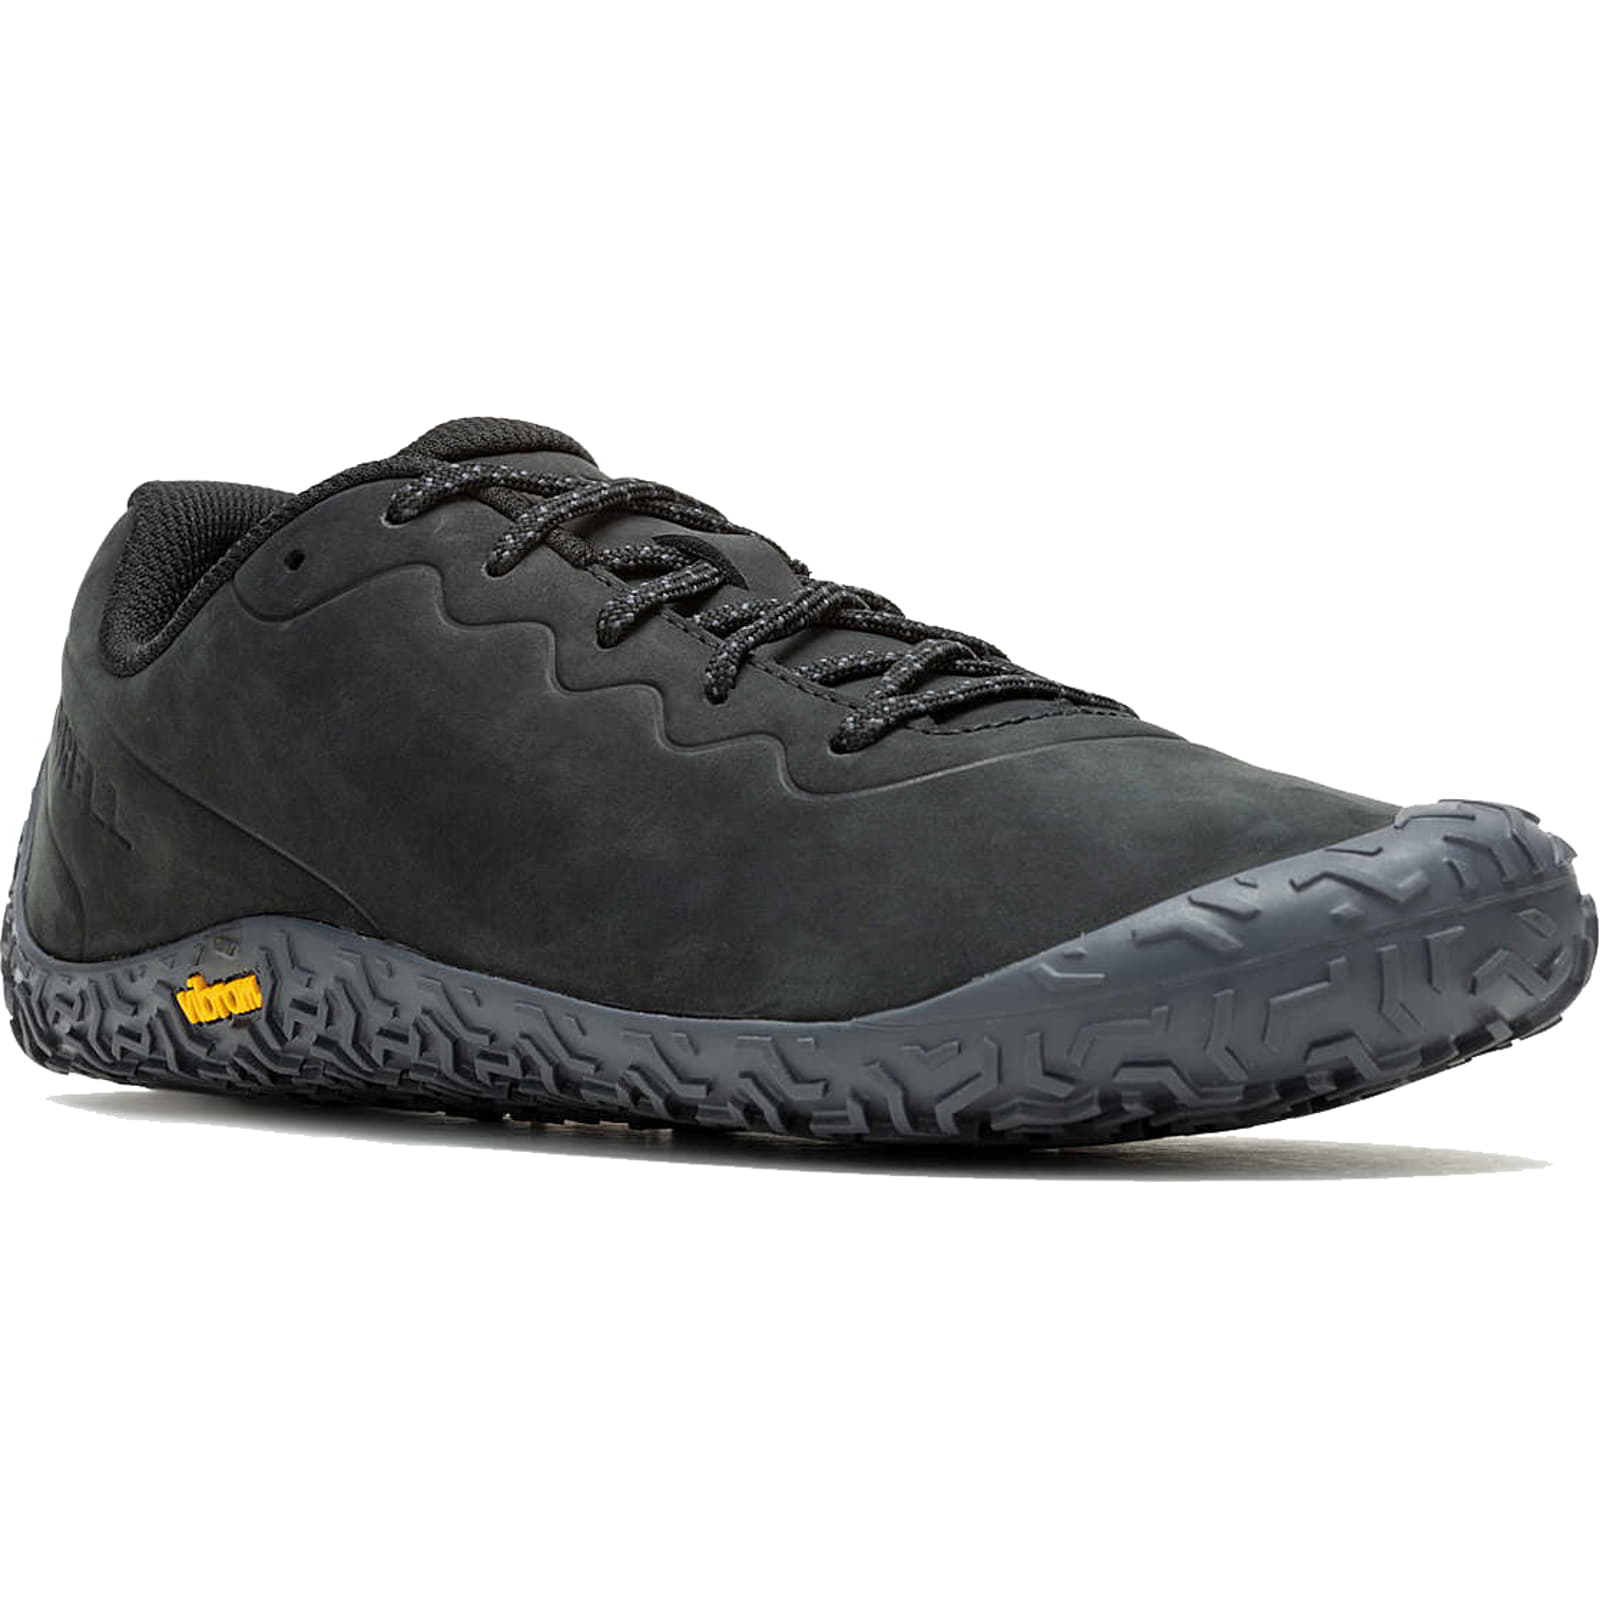 Merrell Men's Vapor Glove 6 Leather Barefoot Running Shoes Trainers - UK 8.5